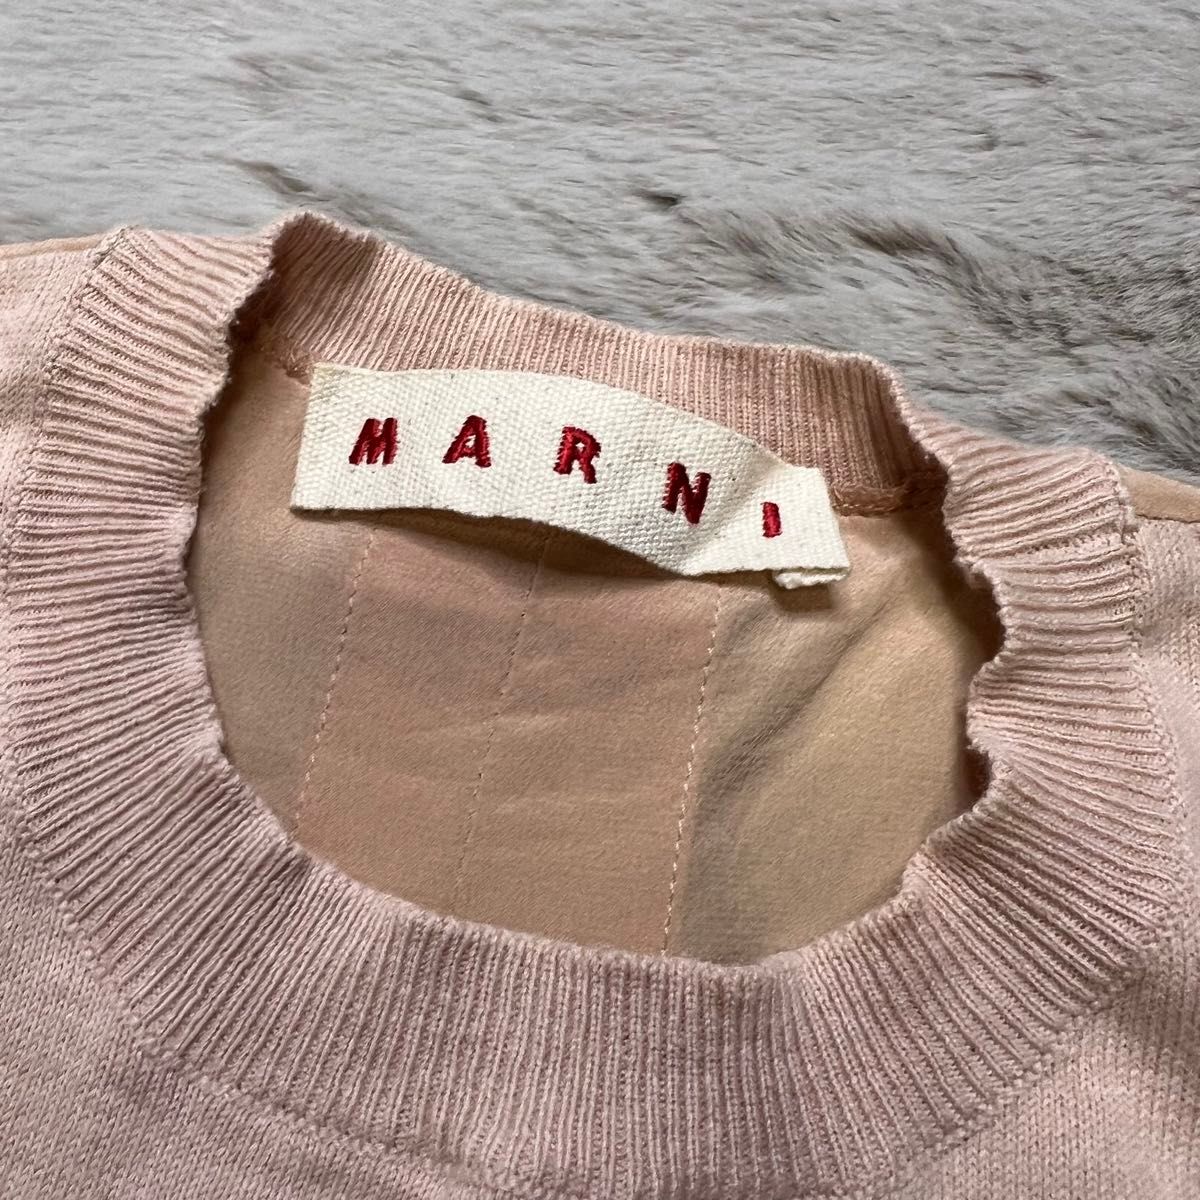 MARNI マルニ シルク ニットセーター 半袖 切り替え ピンク　L 大きめ Tシャツ カットソー イタリア製